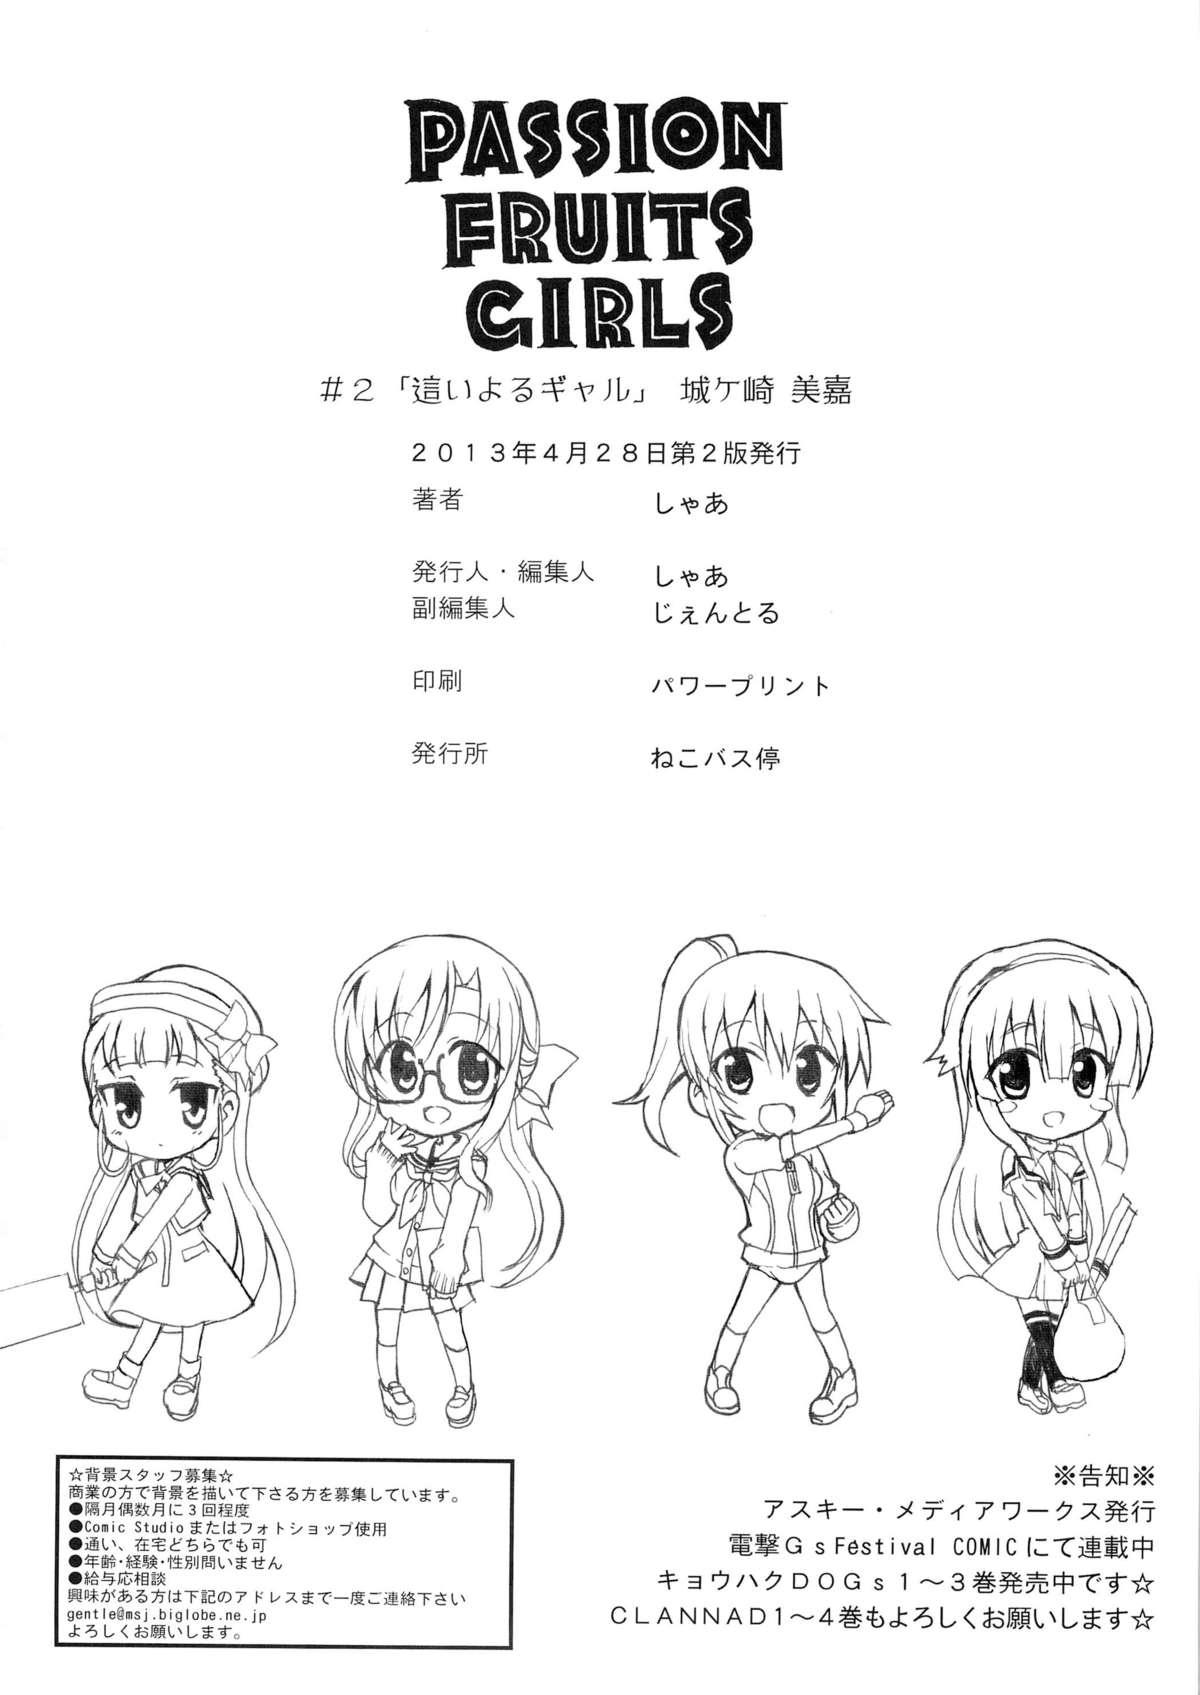 PASSION FRUITS GIRLS #2 "Jougasaki Mika" 32